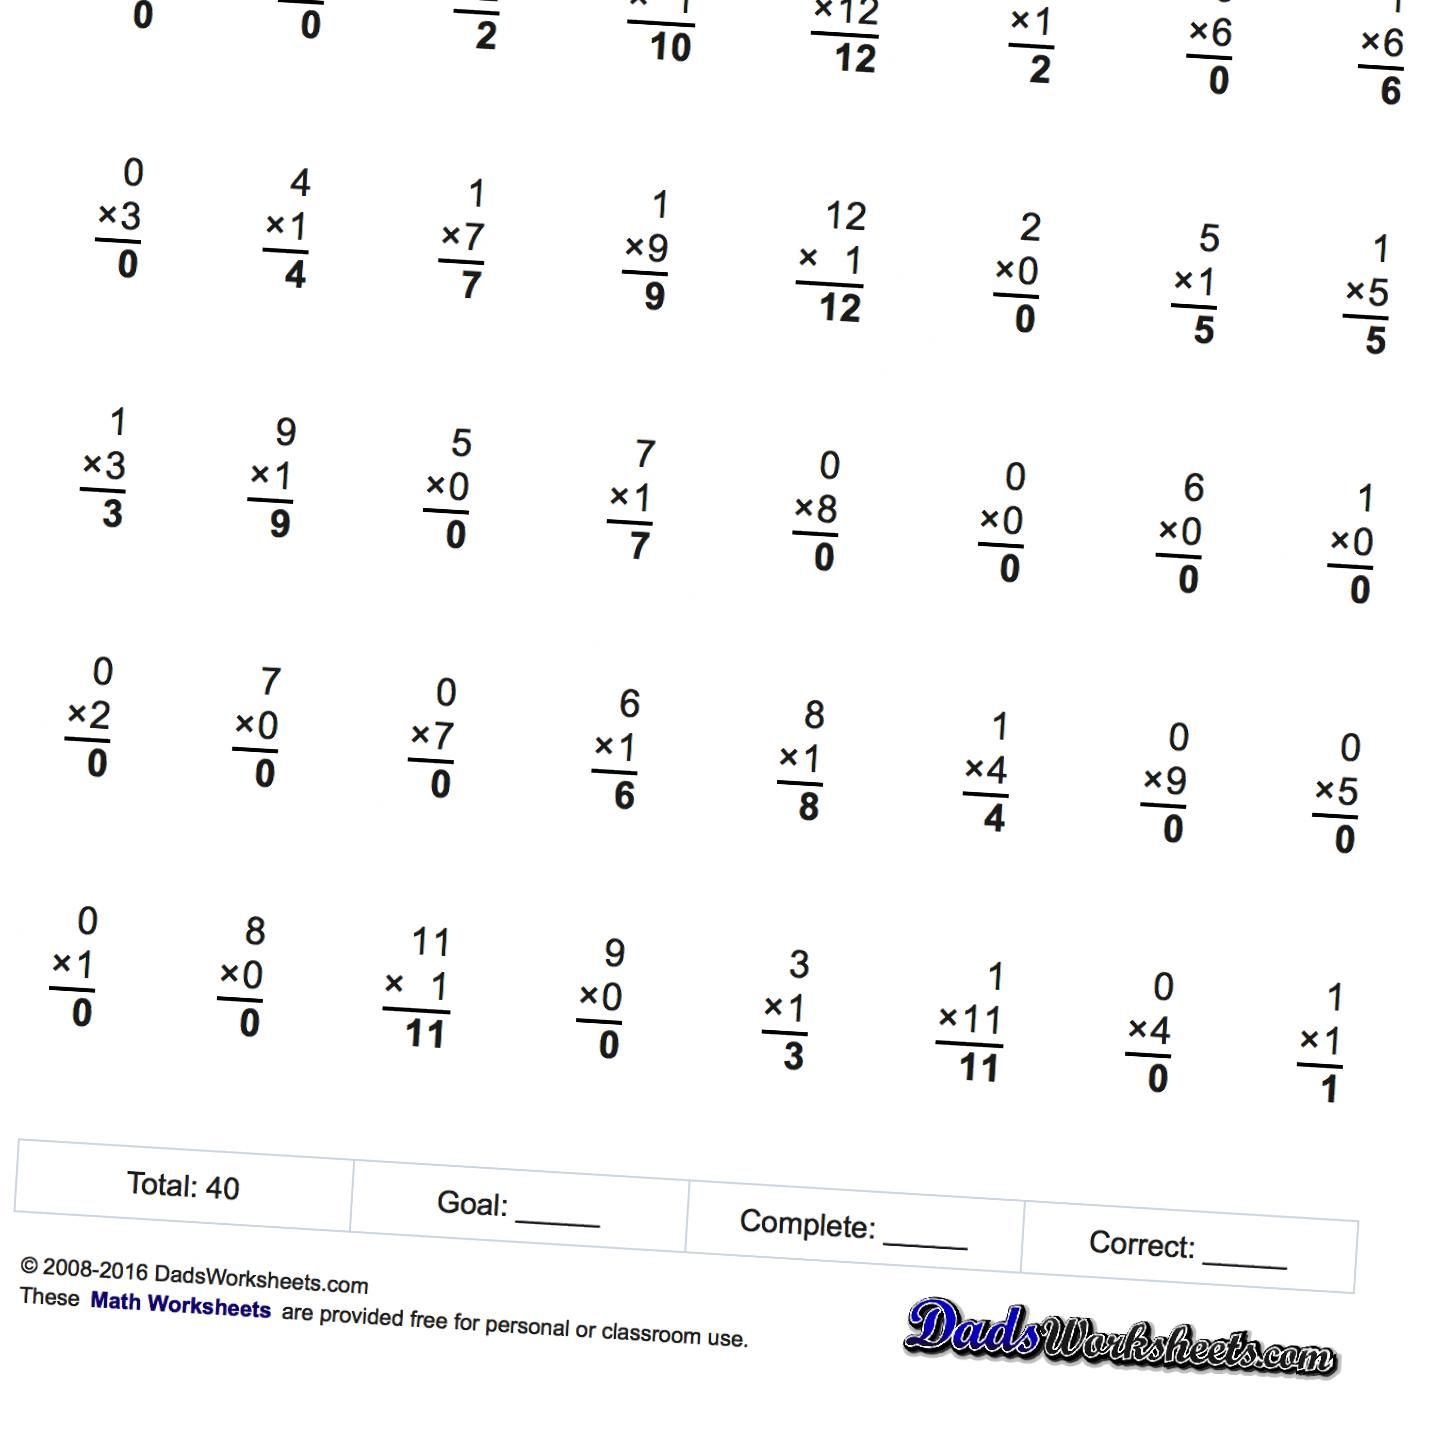 Multiplication Worksheets! Progressive Times Table Practice throughout Multiplication Worksheets X12